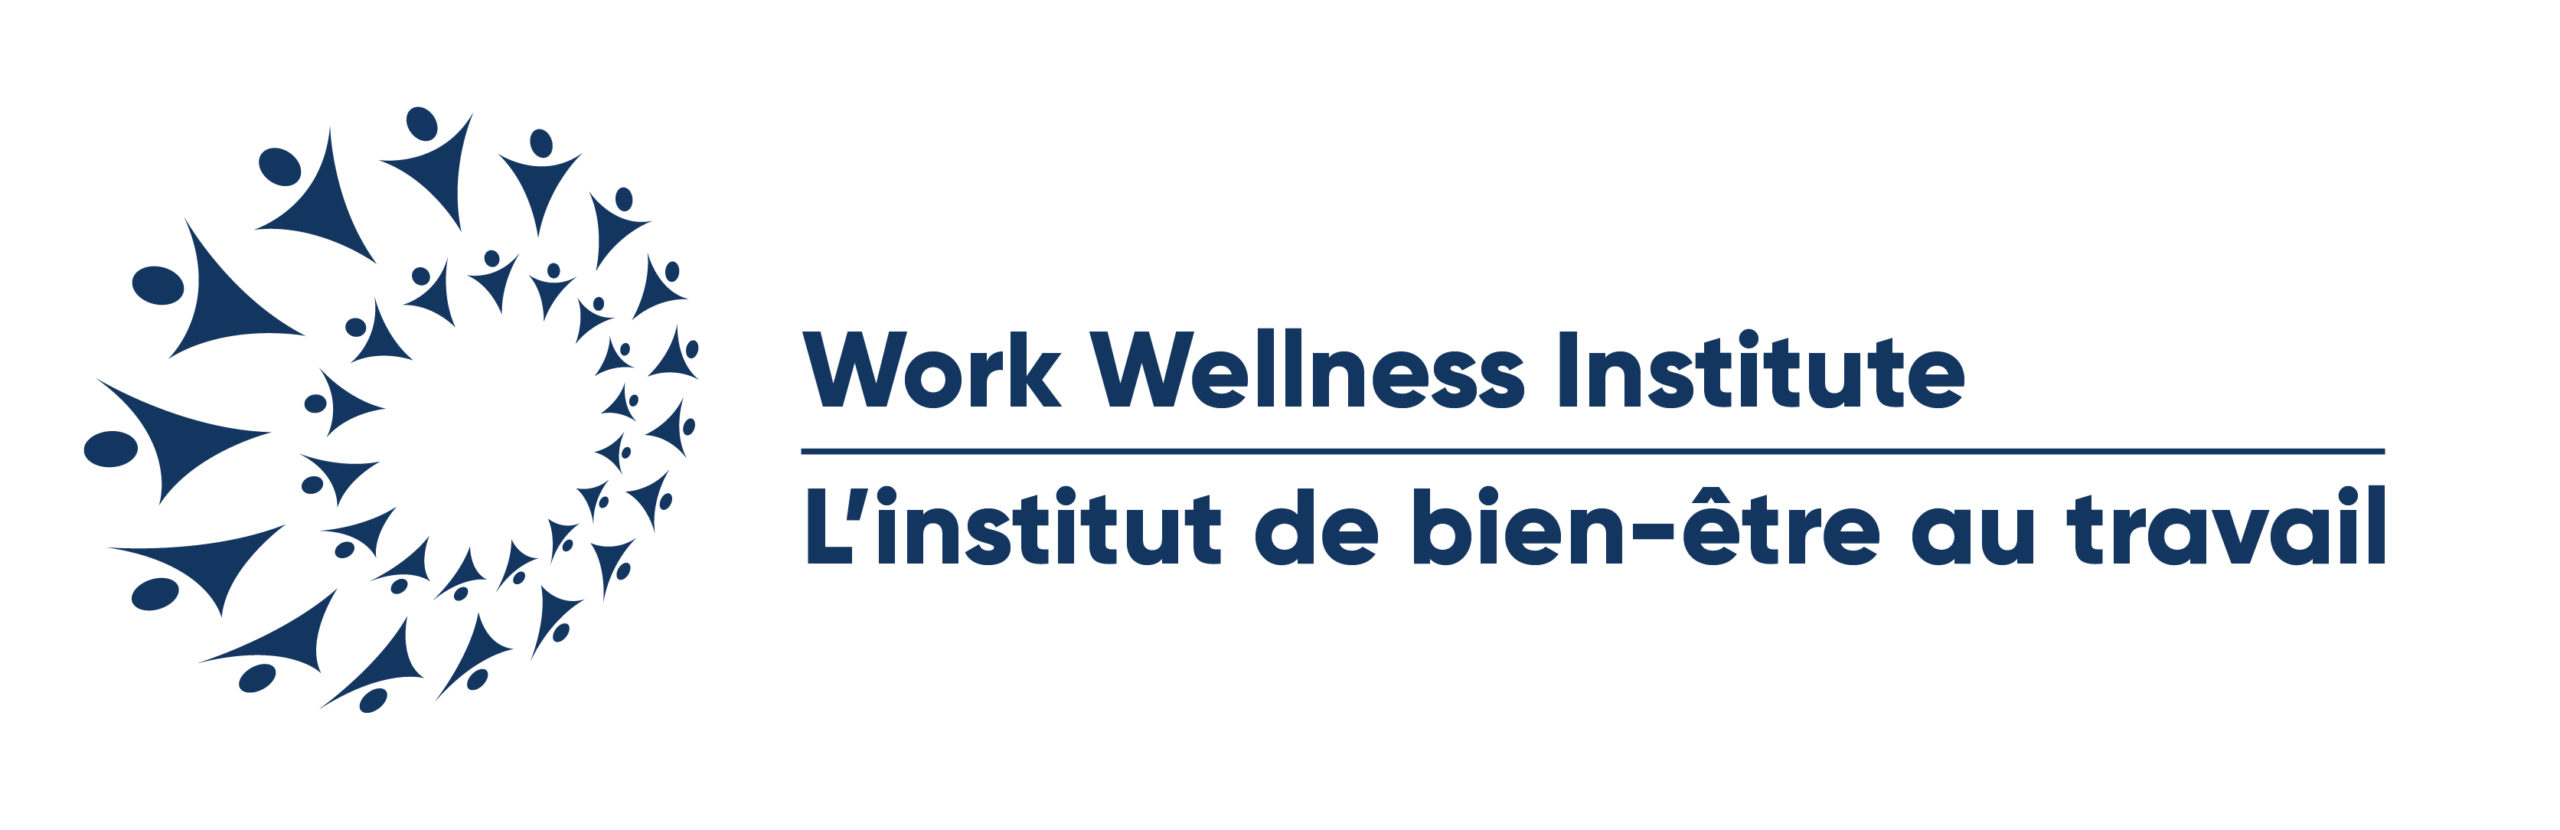 Work Wellness Institute